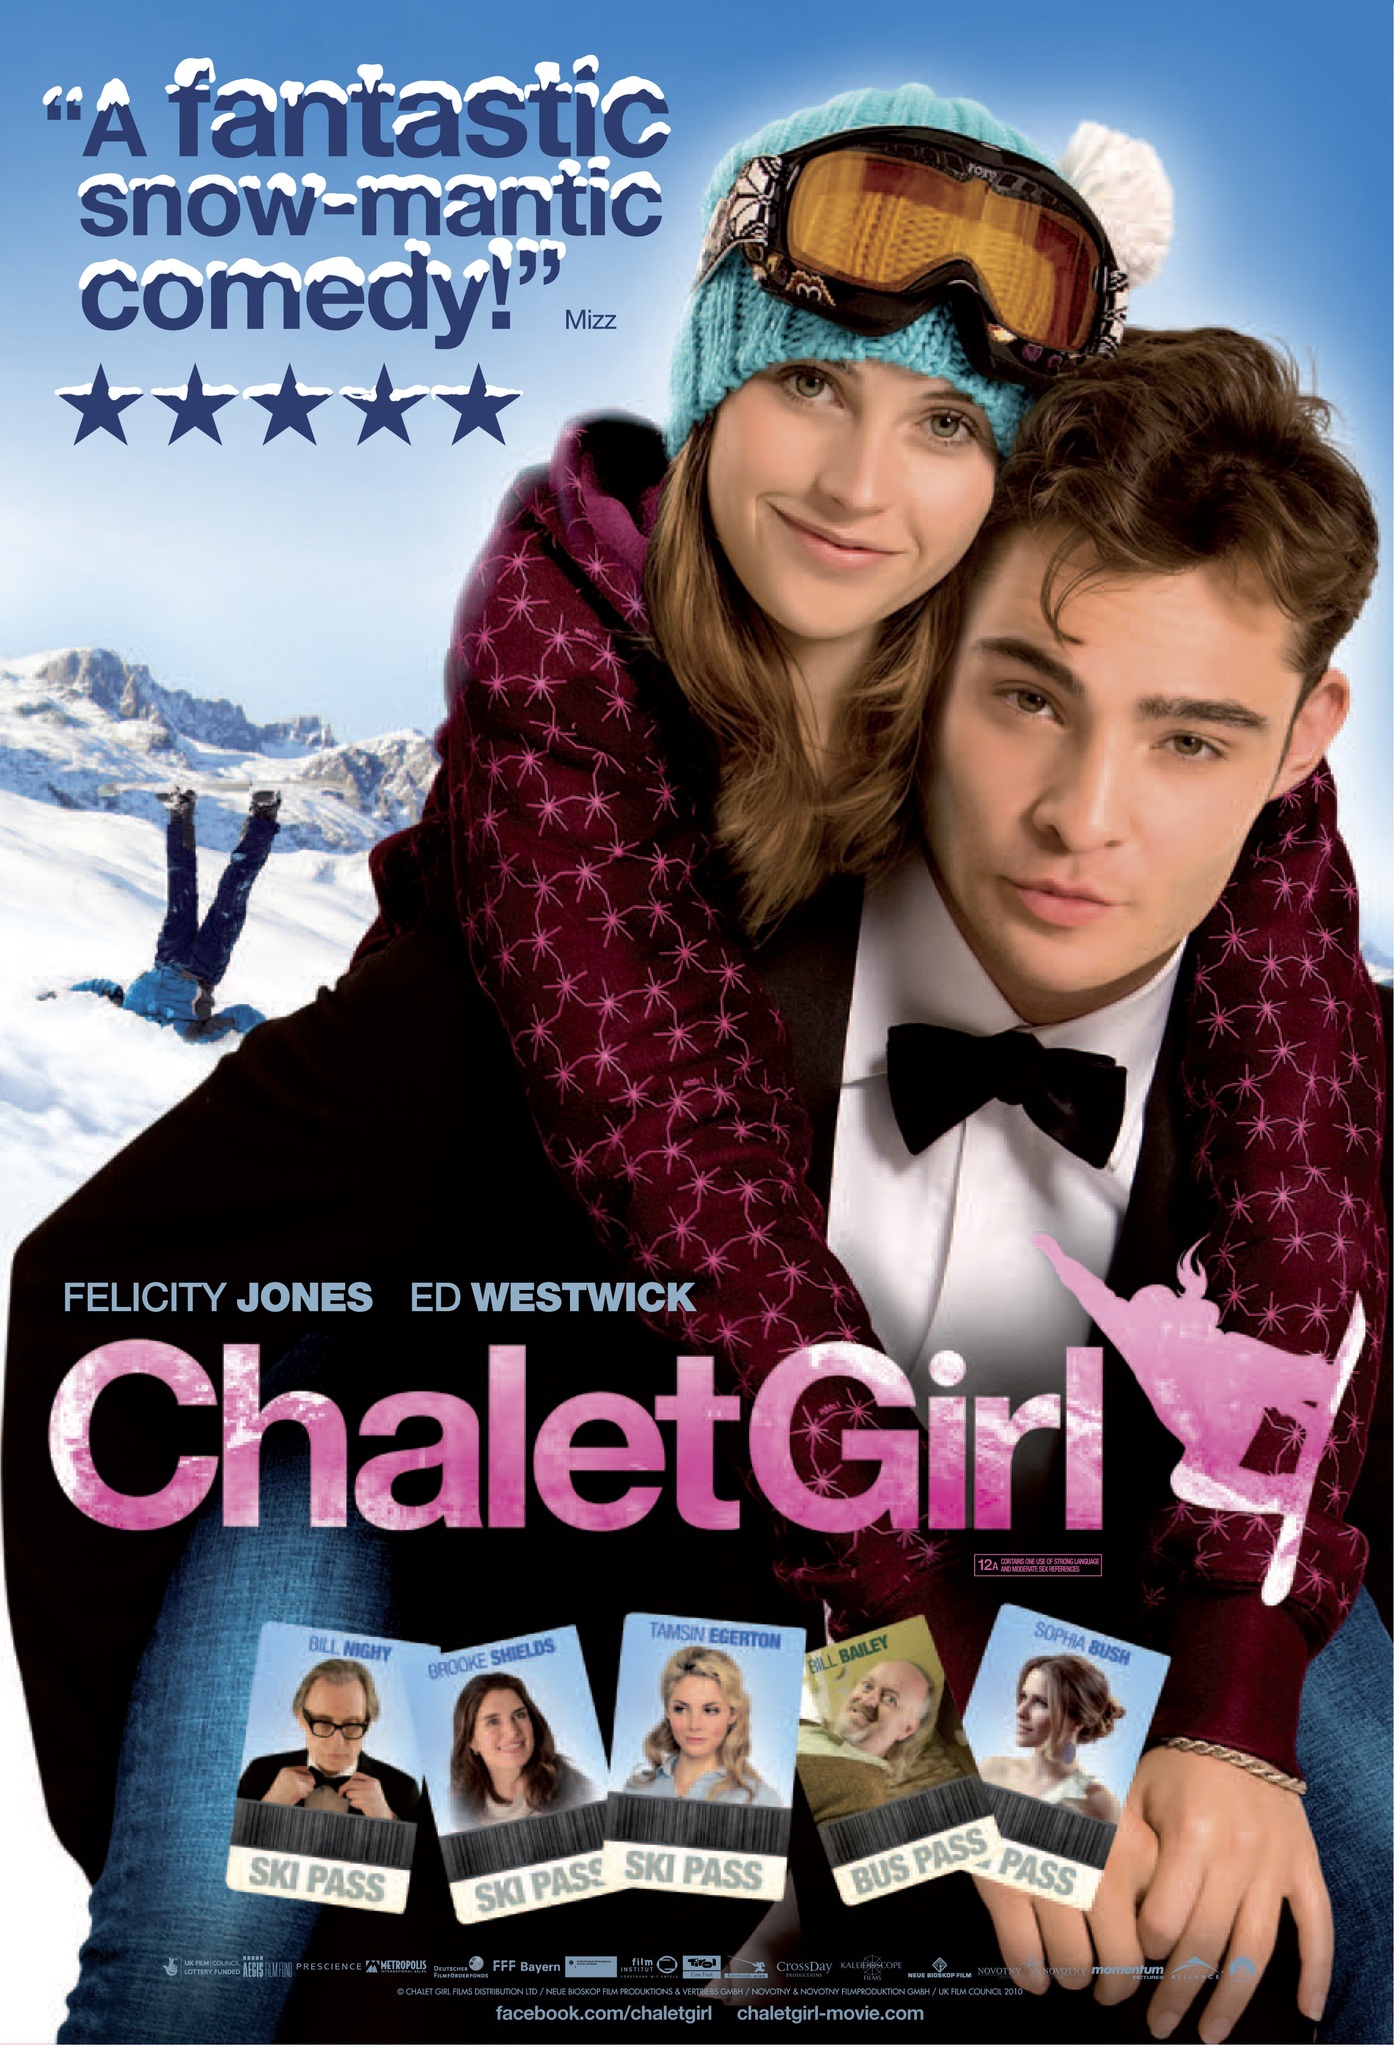 Felicity Jones and Ed Westwick in Chalet Girl (2011)